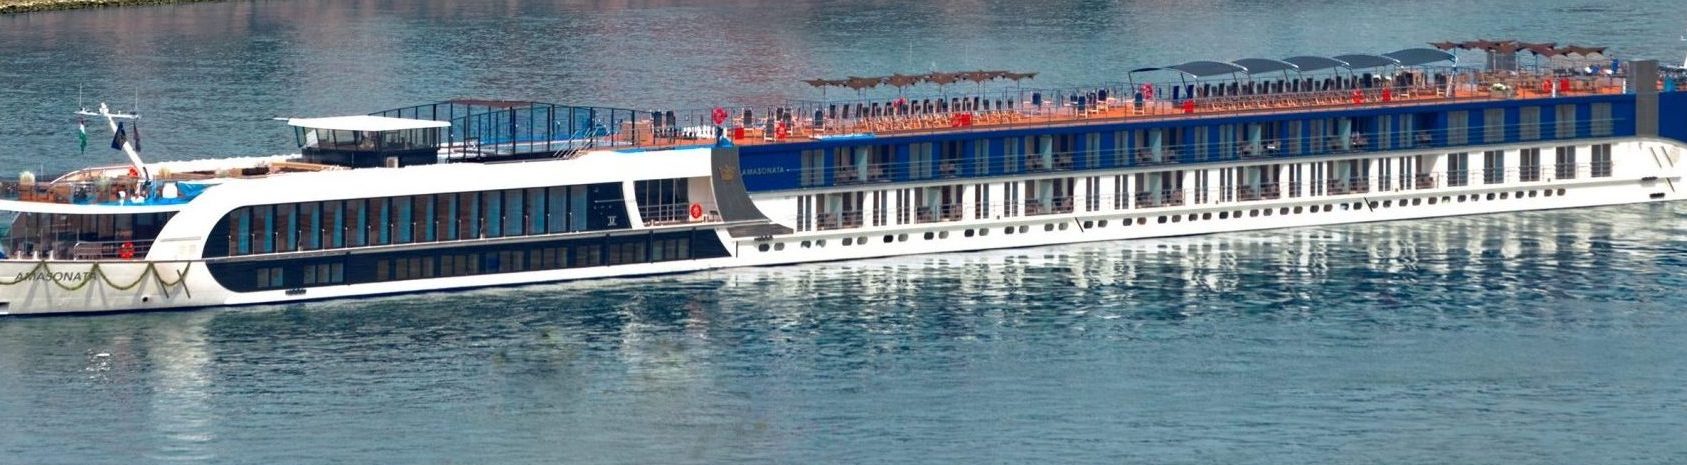 amasonata river cruise ship